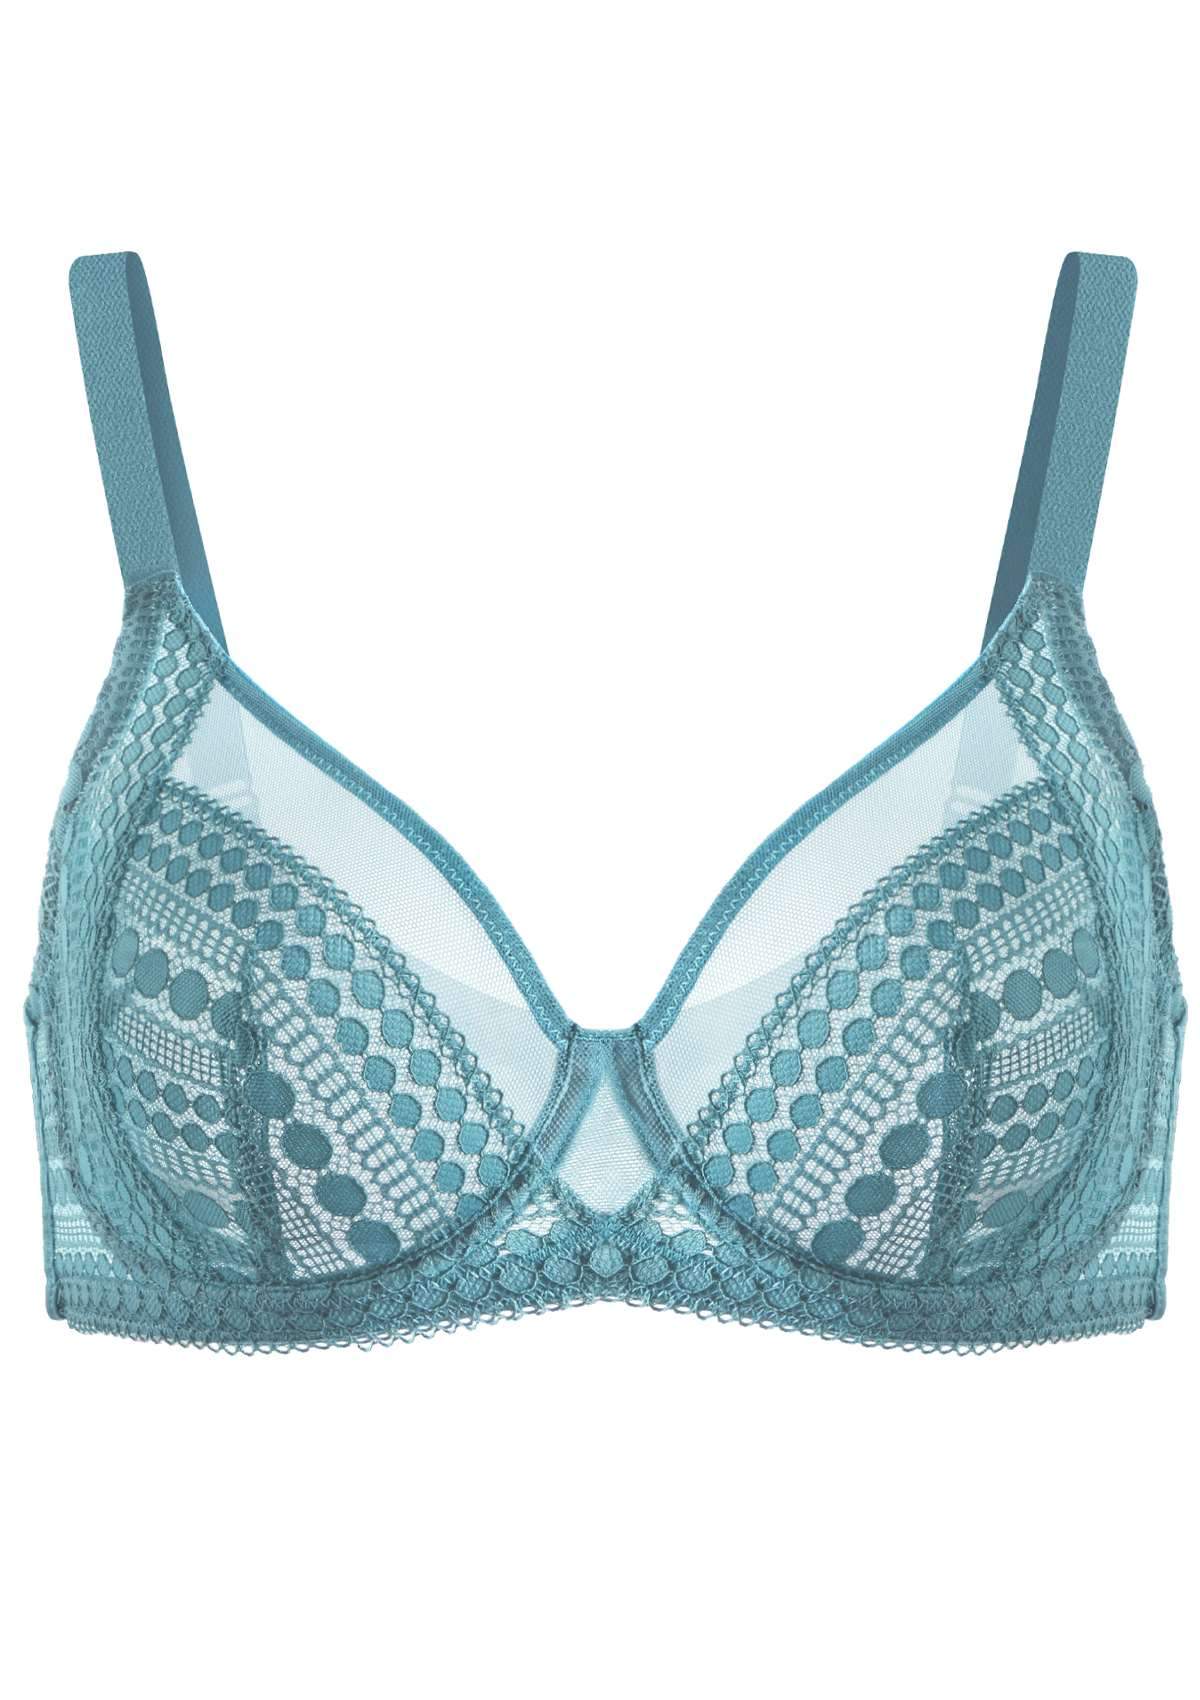 HSIA Heroine Matching Bra And Underwear Set: Bra For Big Boobs - Brittany Blue / 42 / DDD/F